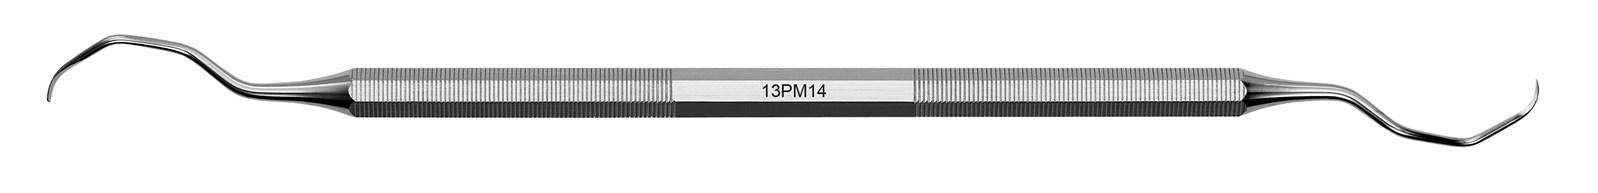 Kyreta Gracey Mini - 13PM14, ADEP šedý